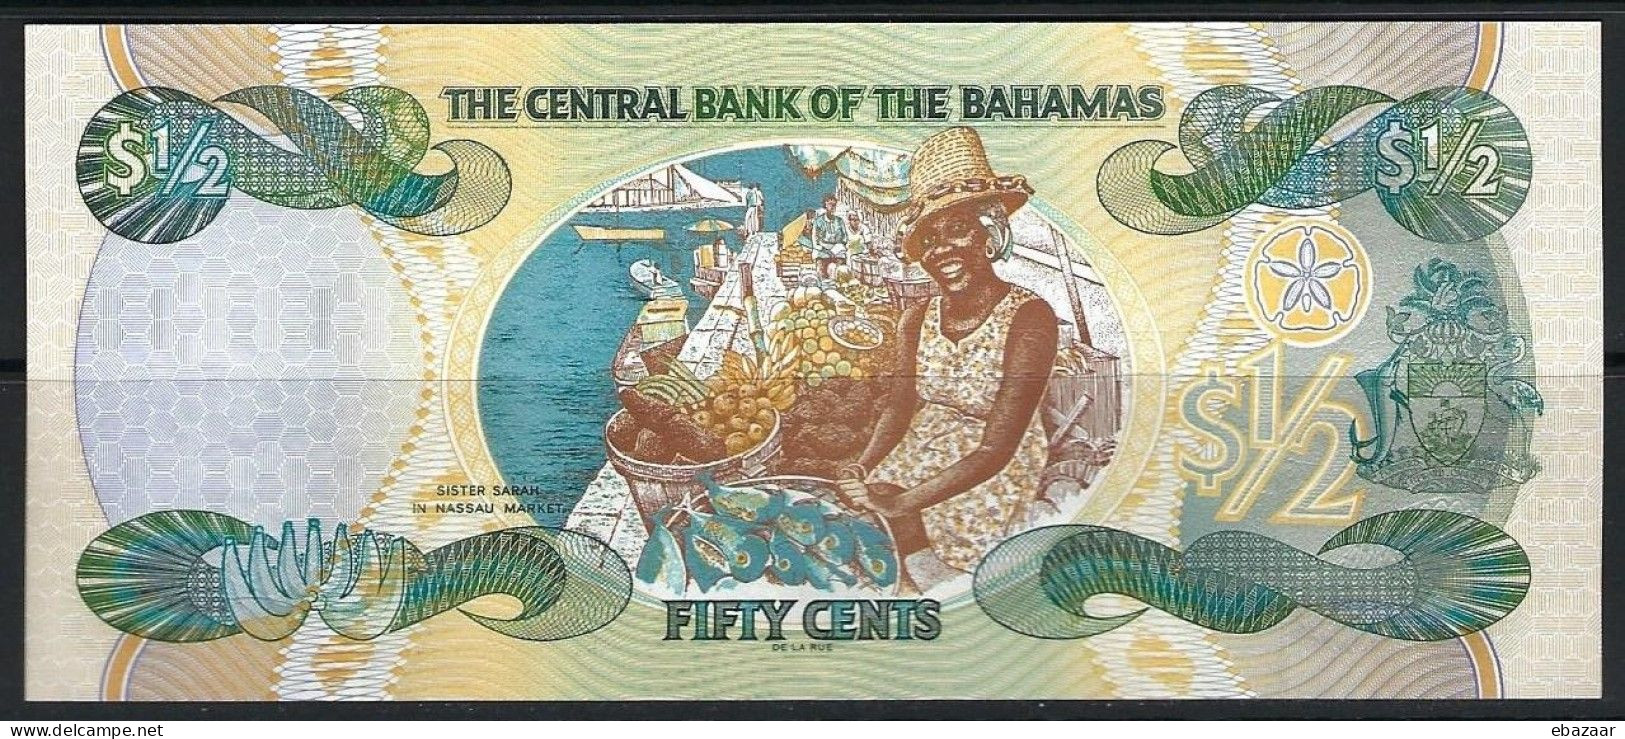 Bahamas 2001 Banknotes 1/2 Dollar Fifty Cents UNC P-68a Consecutive Serial Number Available - Bahamas